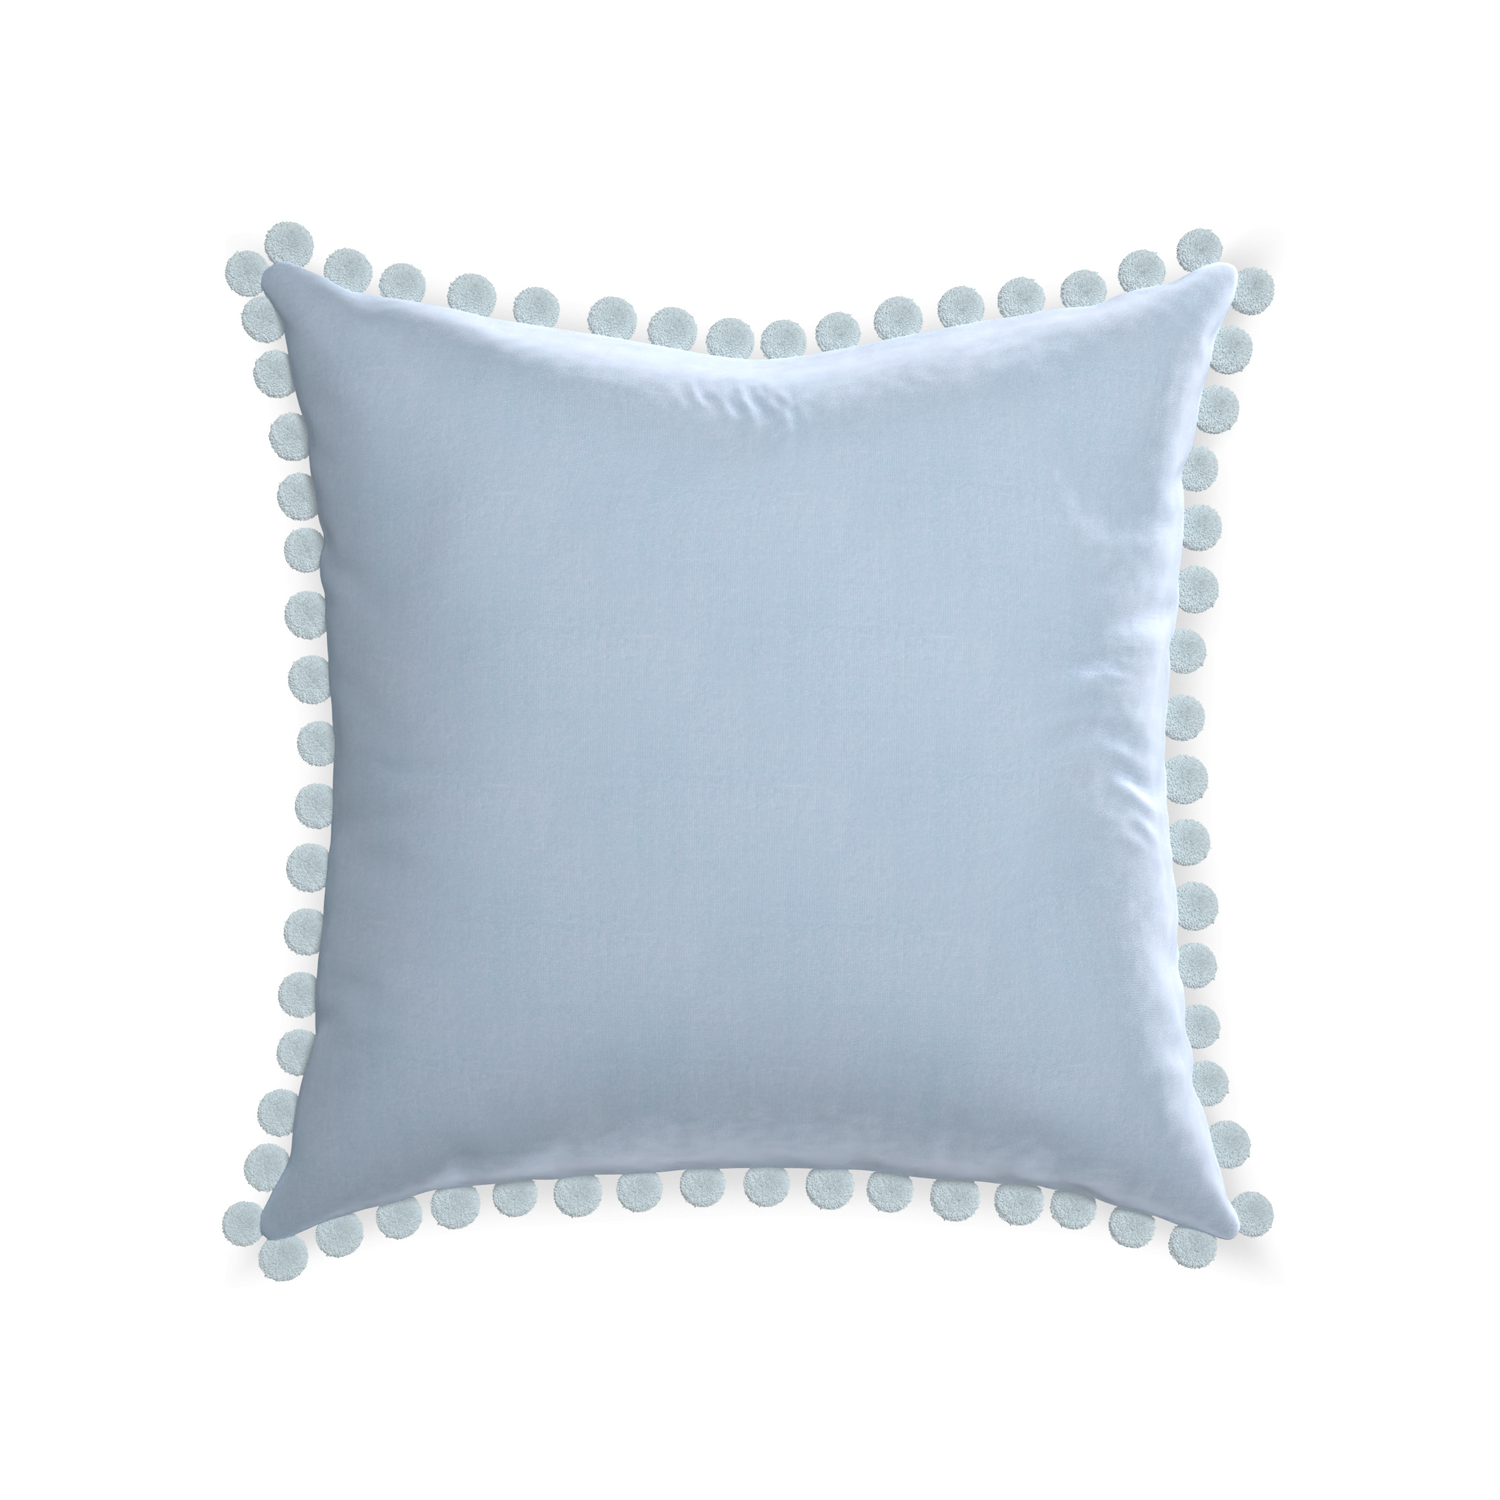 square light blue velvet pillow with light blue pom pom